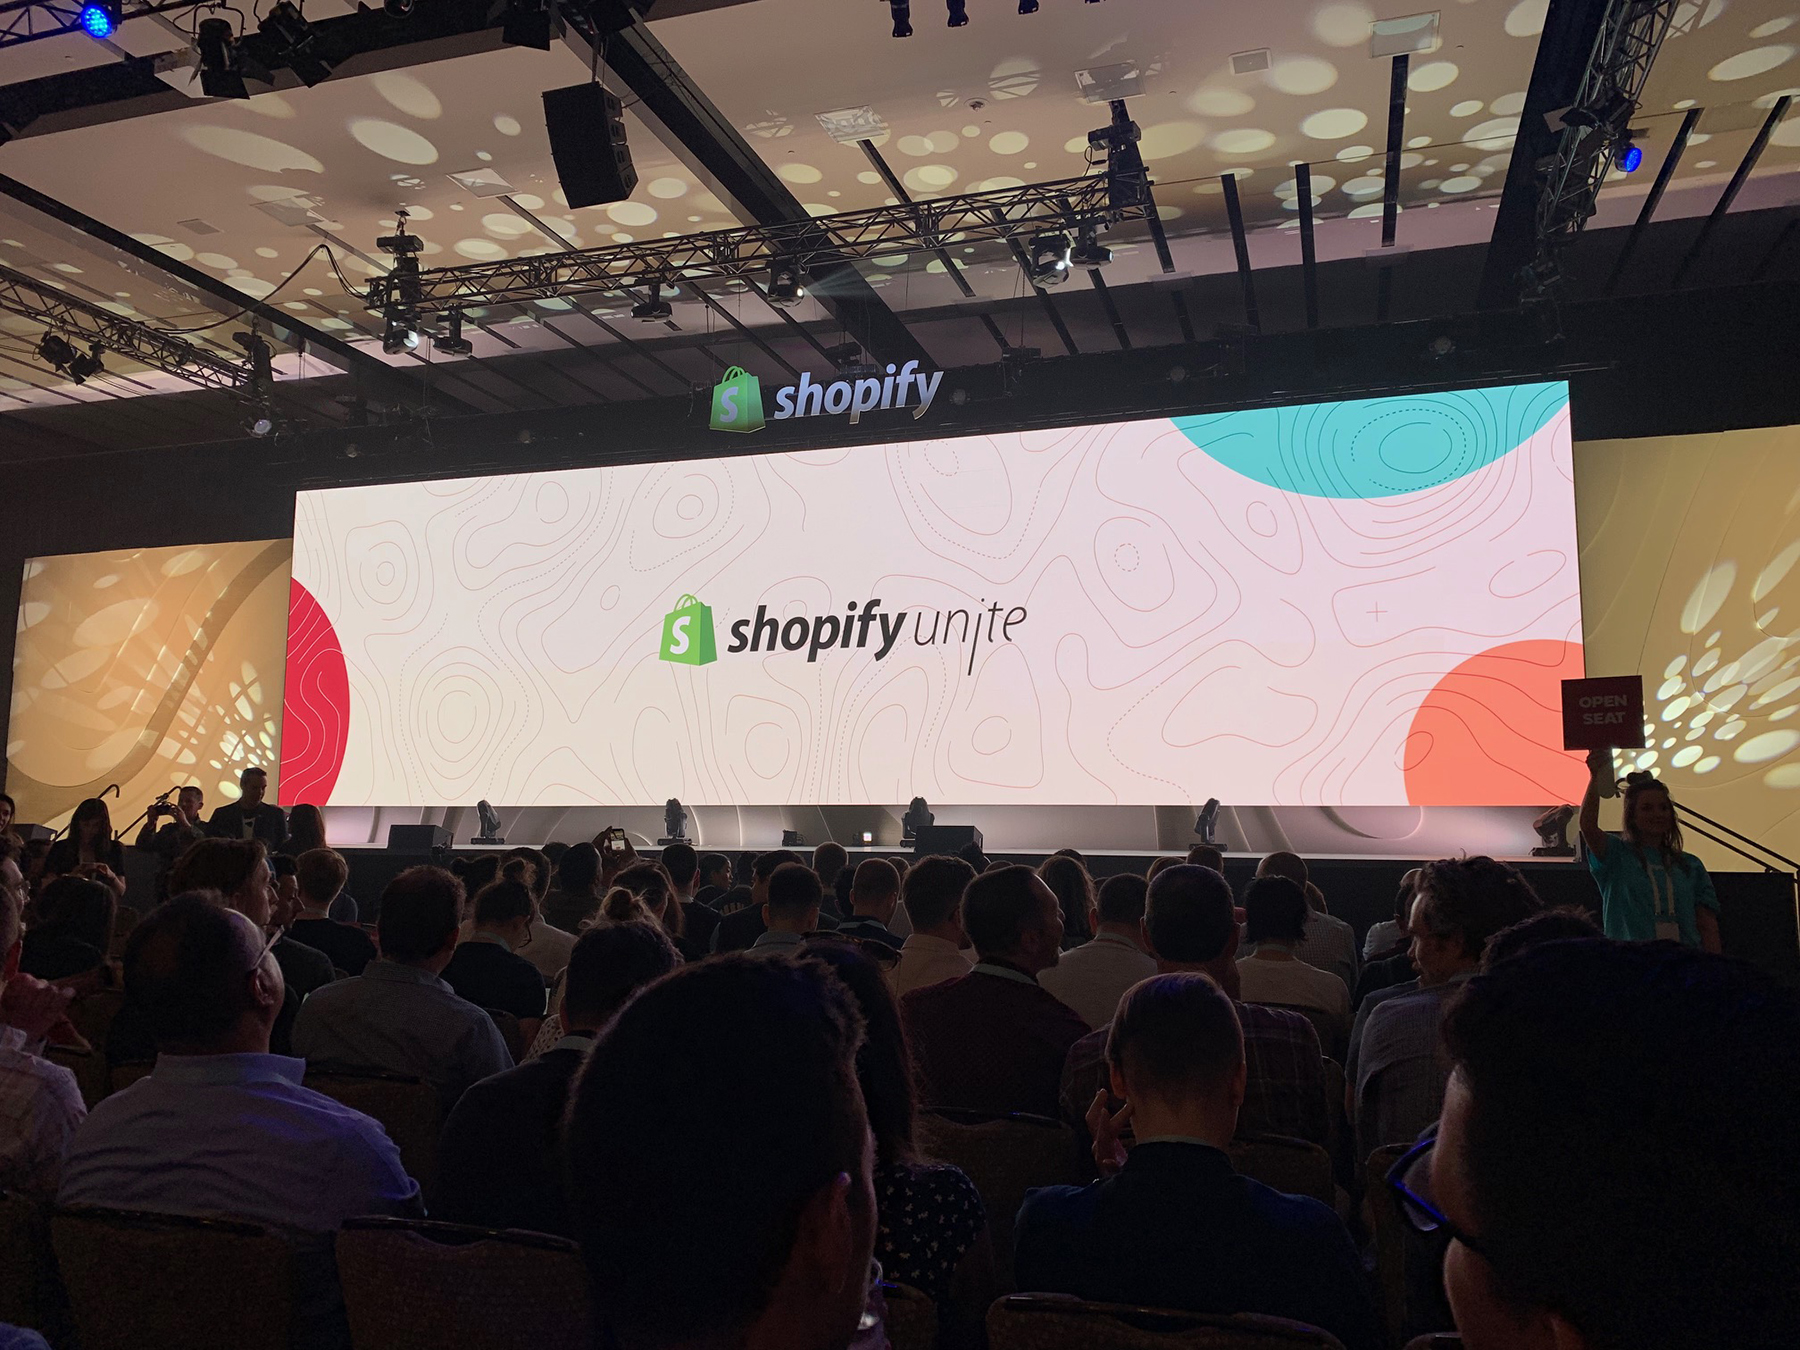 Shopify Unite 2019